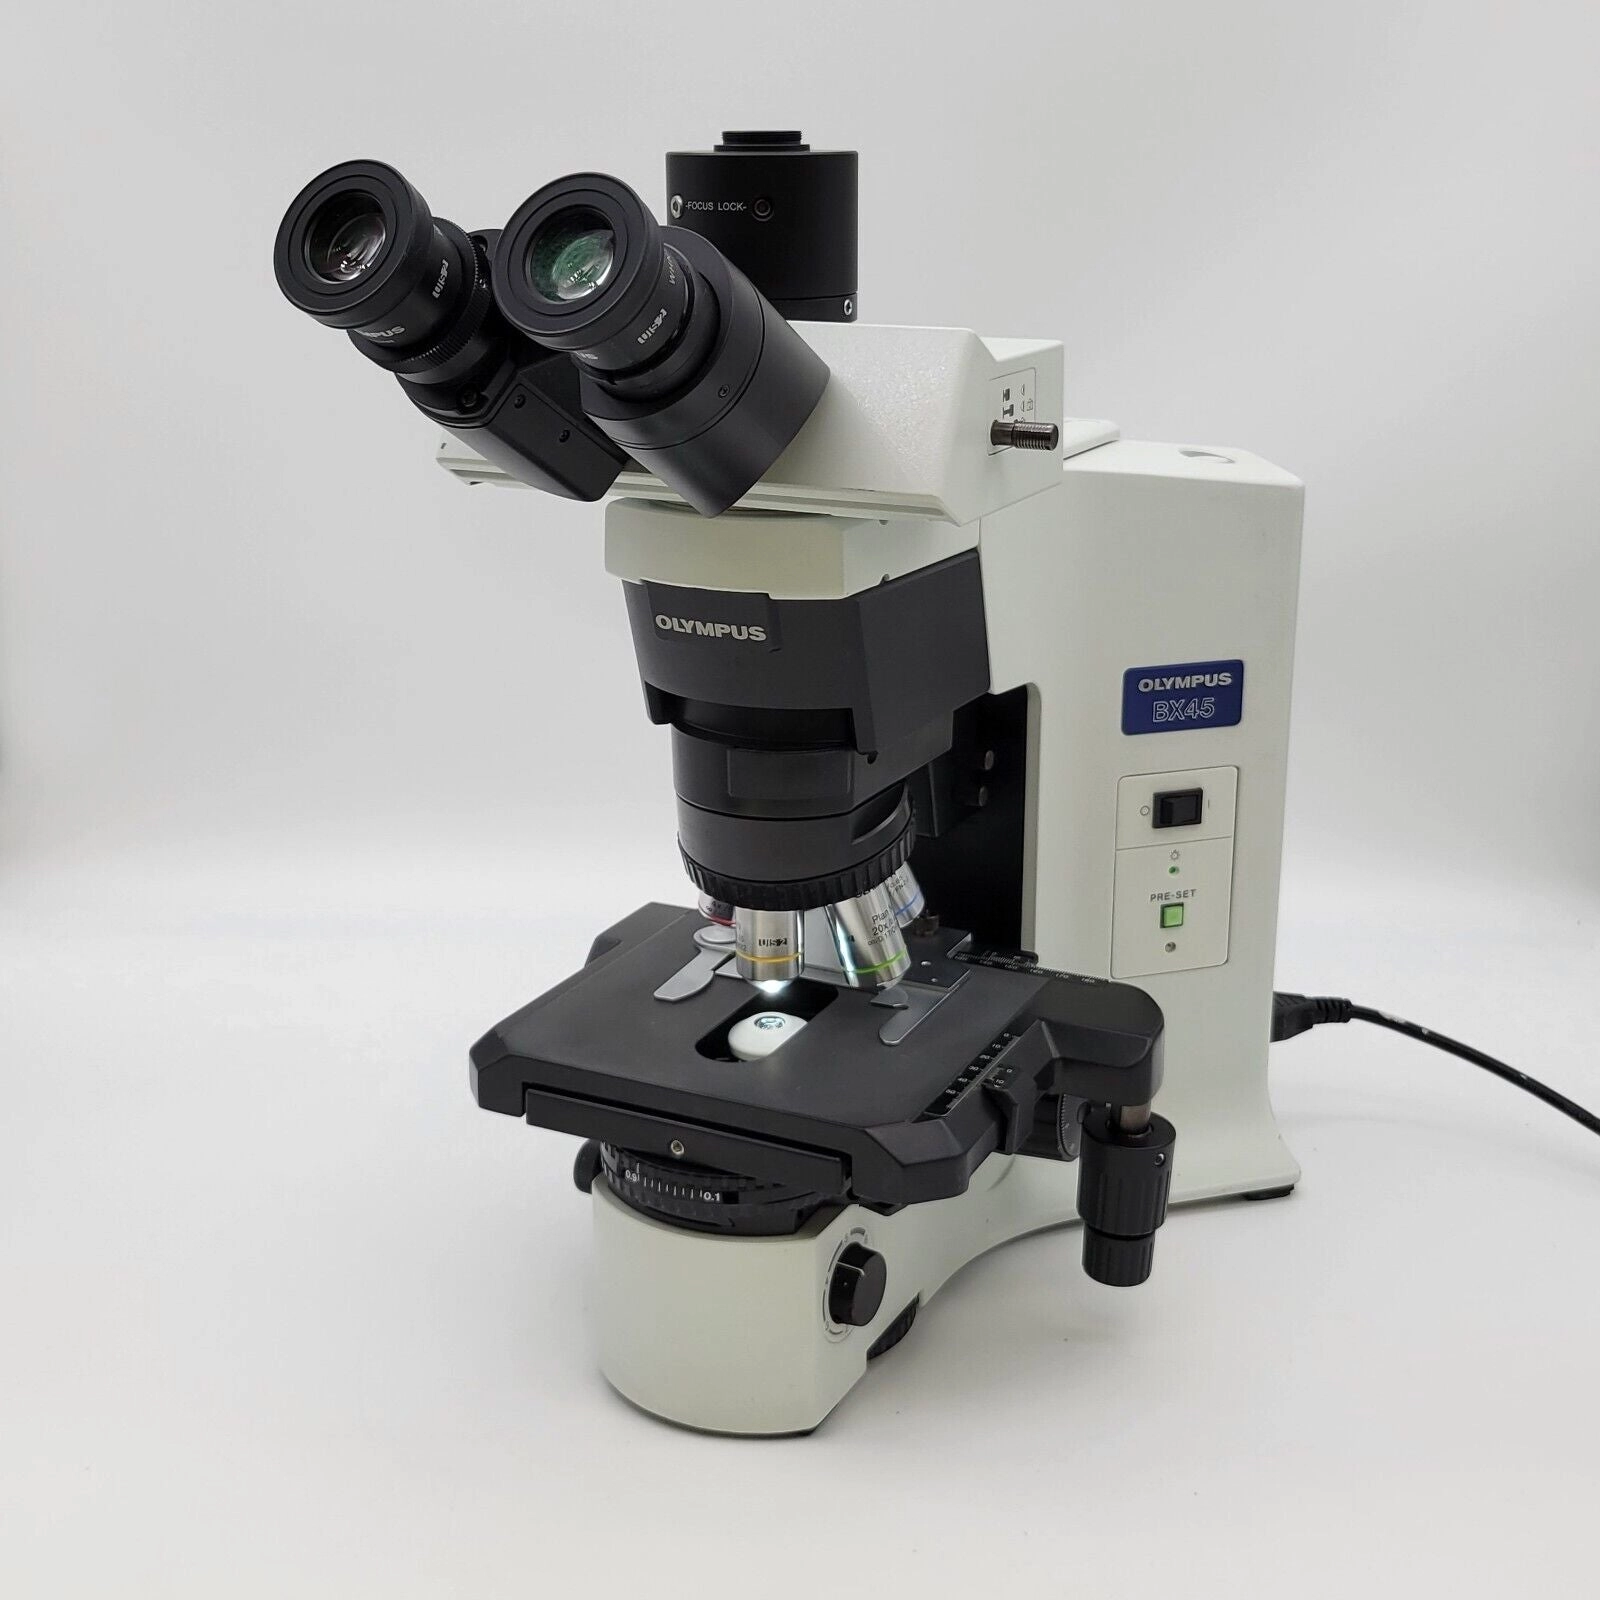 Olympus Microscope BX45 Pathology / Mohs with Trinocular Head